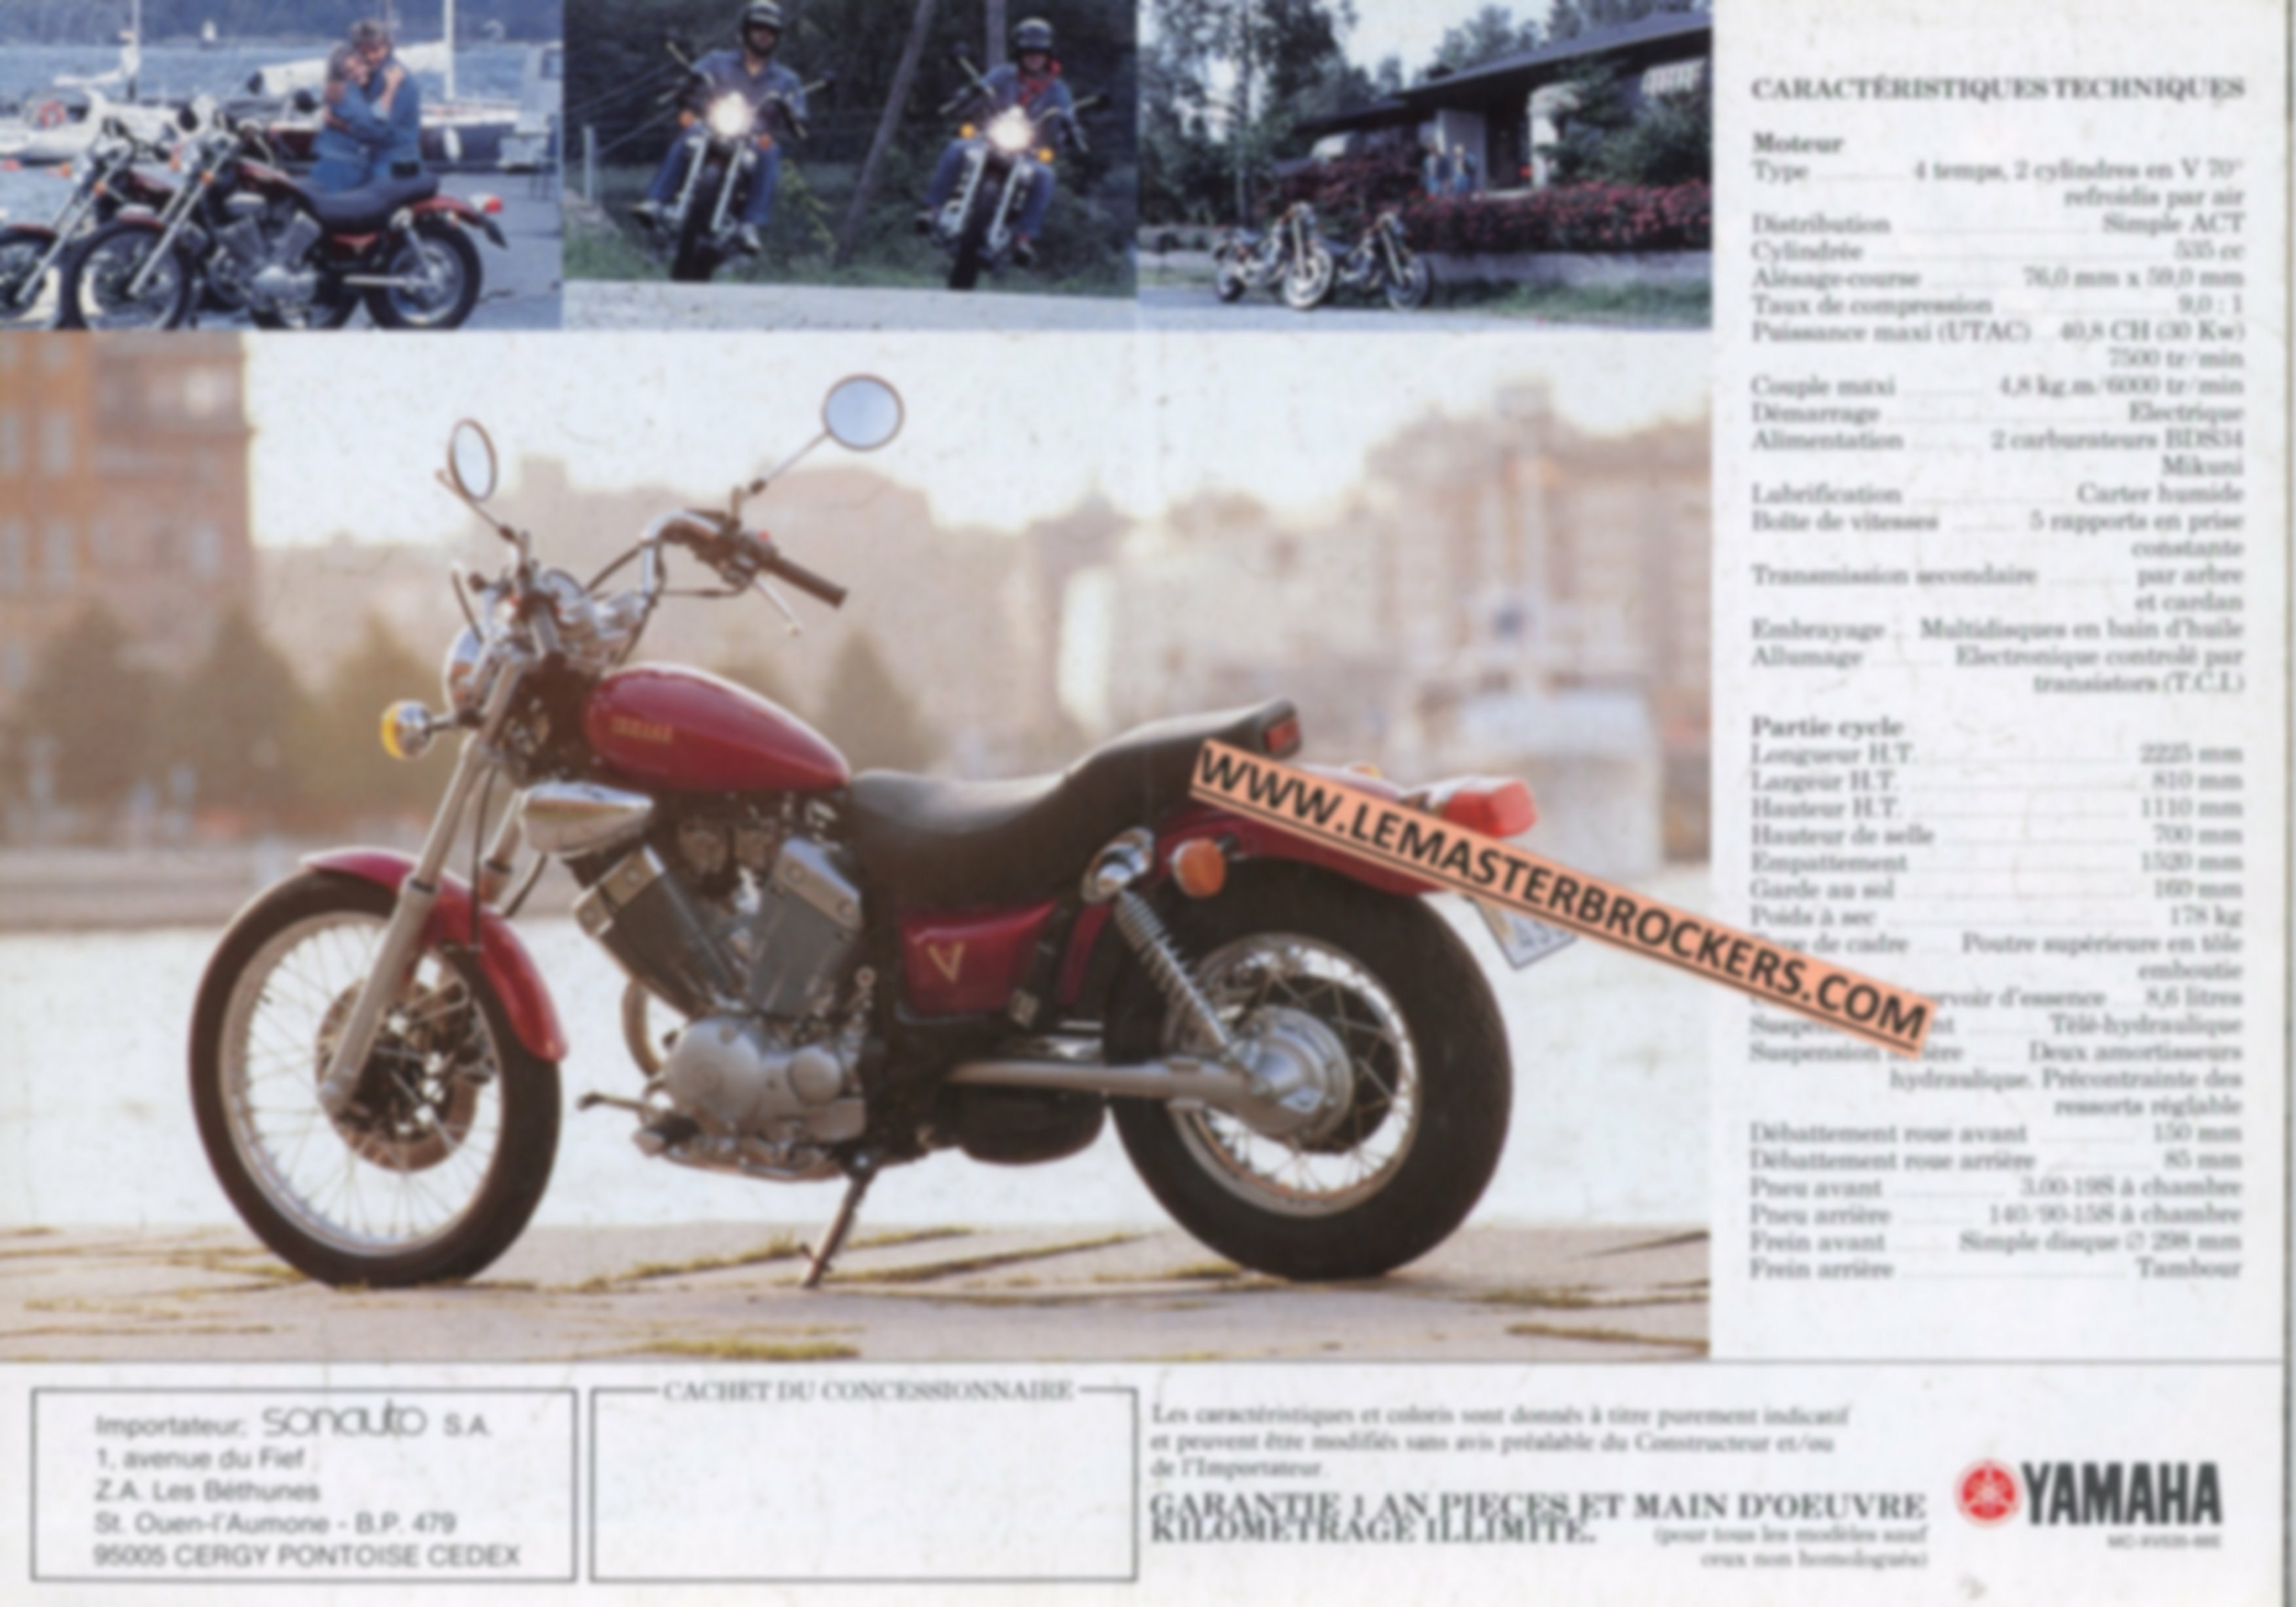 brochure-moto-yamaha-xv-535-virago-xv535-prospekt-LEMASTERBROCKERS